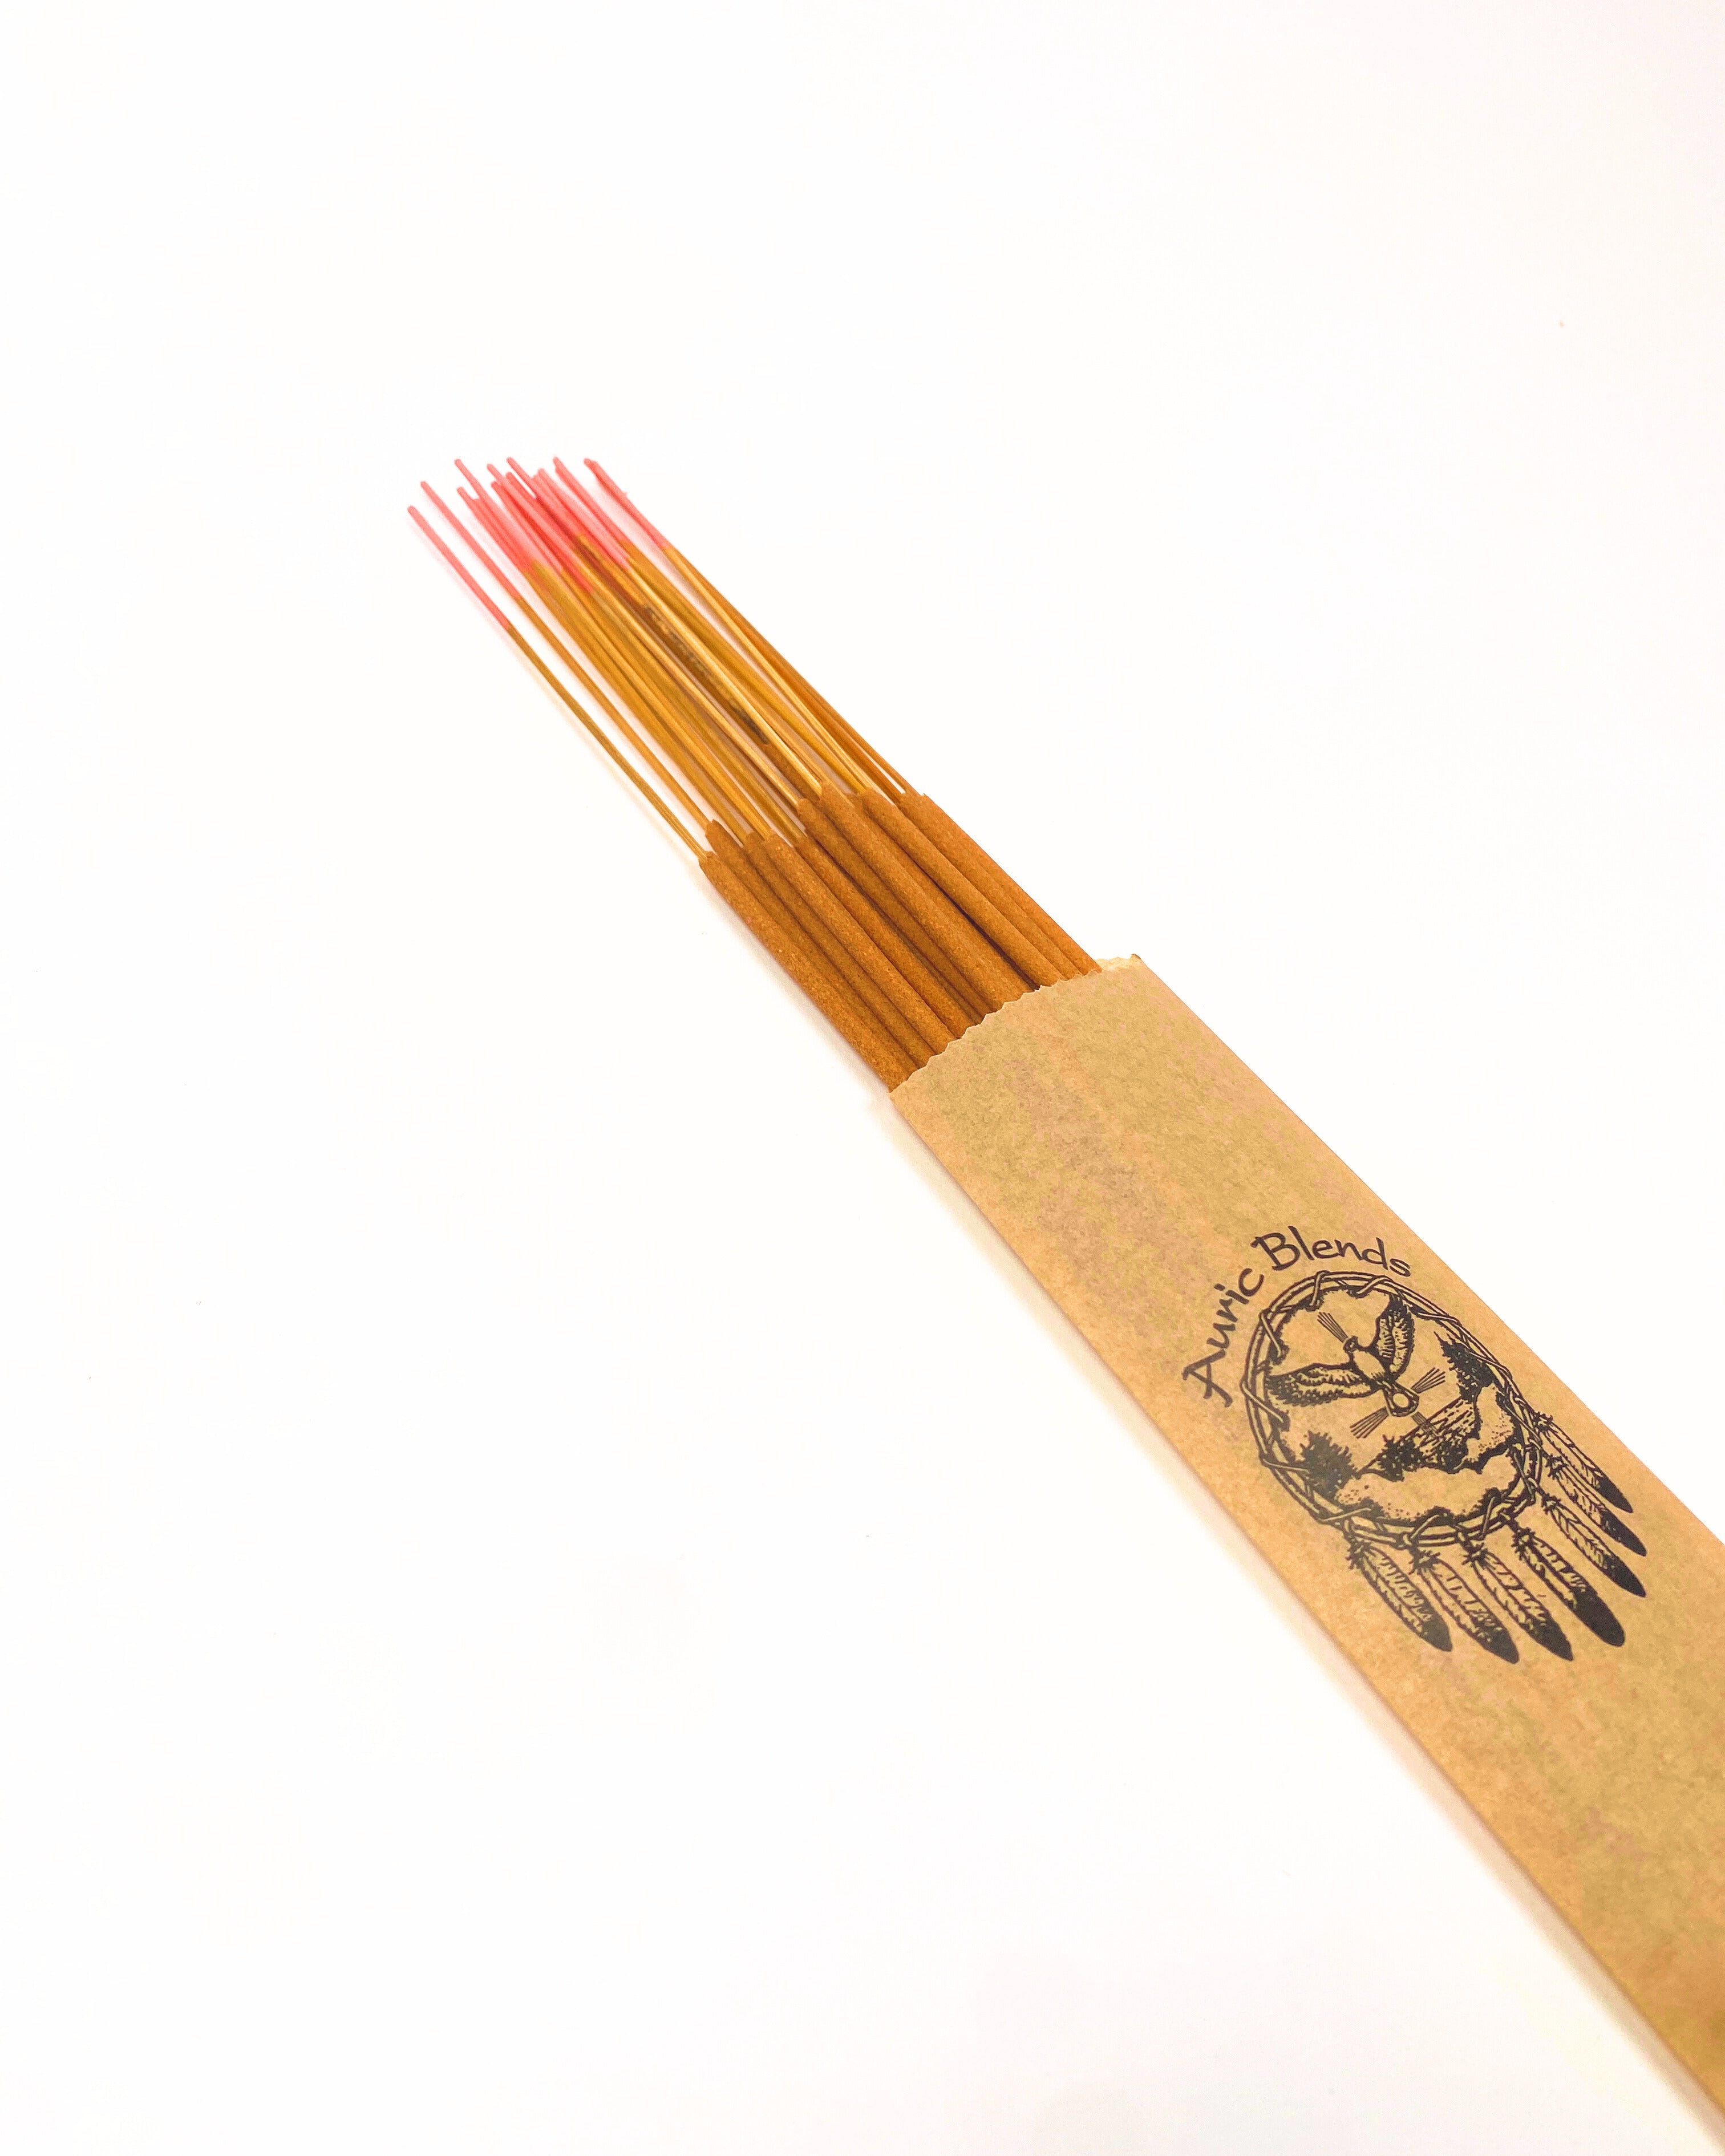 Rose Musk Incense Sticks